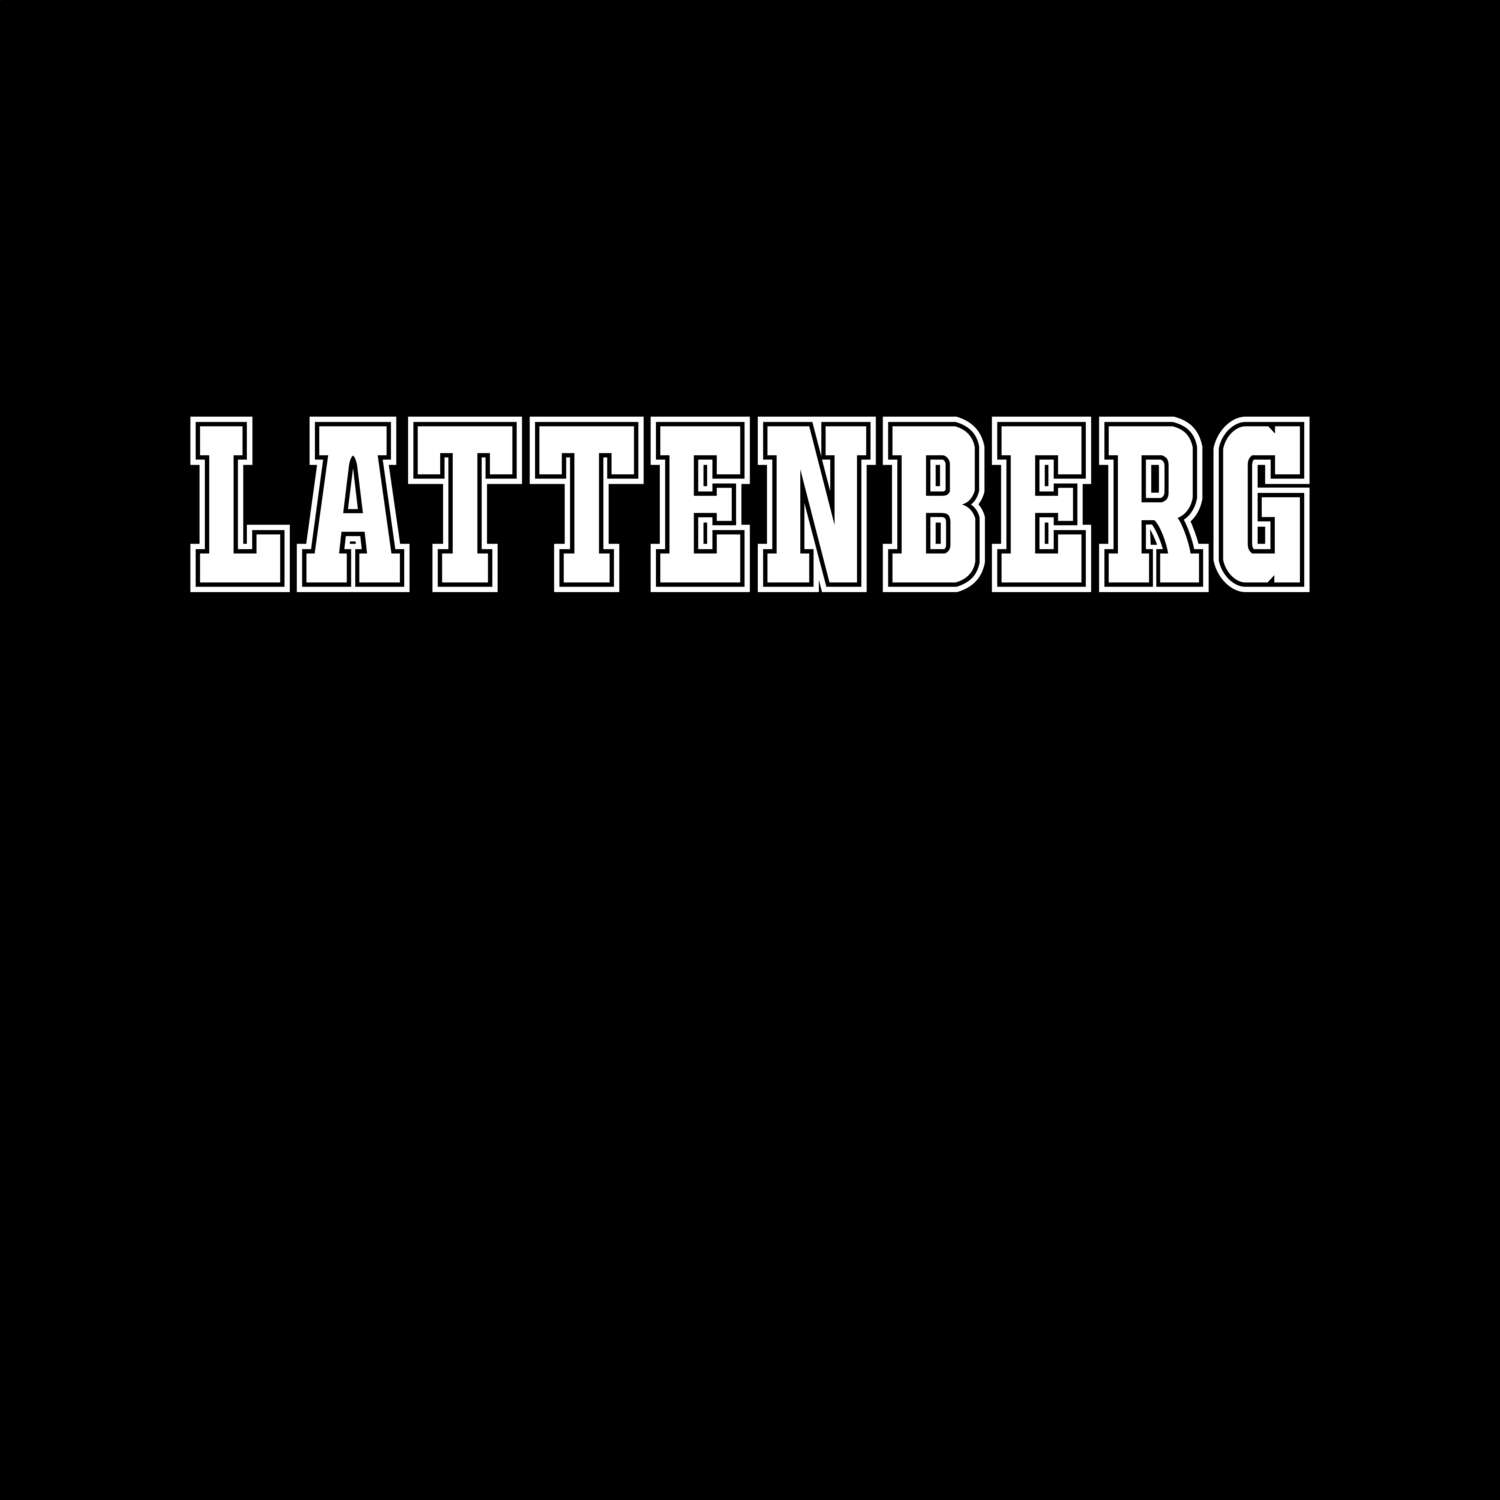 Lattenberg T-Shirt »Classic«